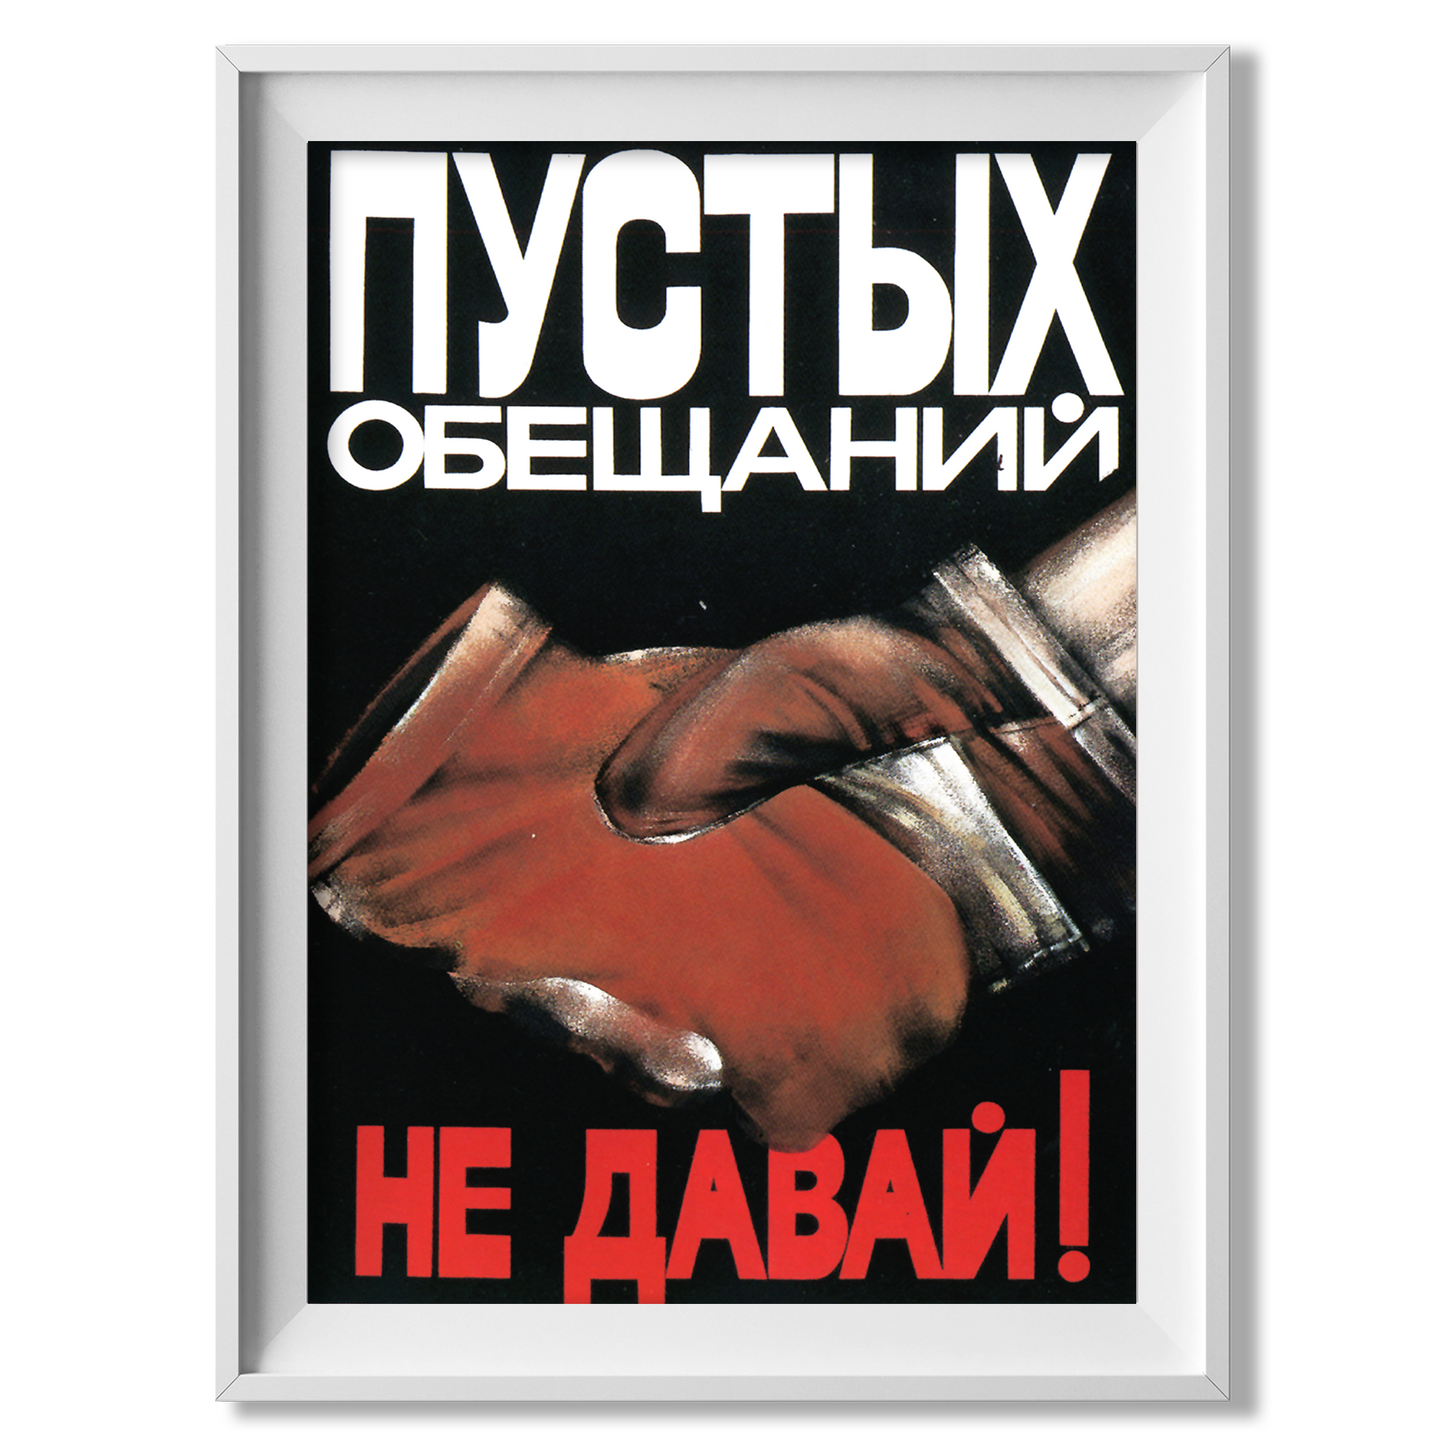 Empty Promises - Soviet Propaganda poster